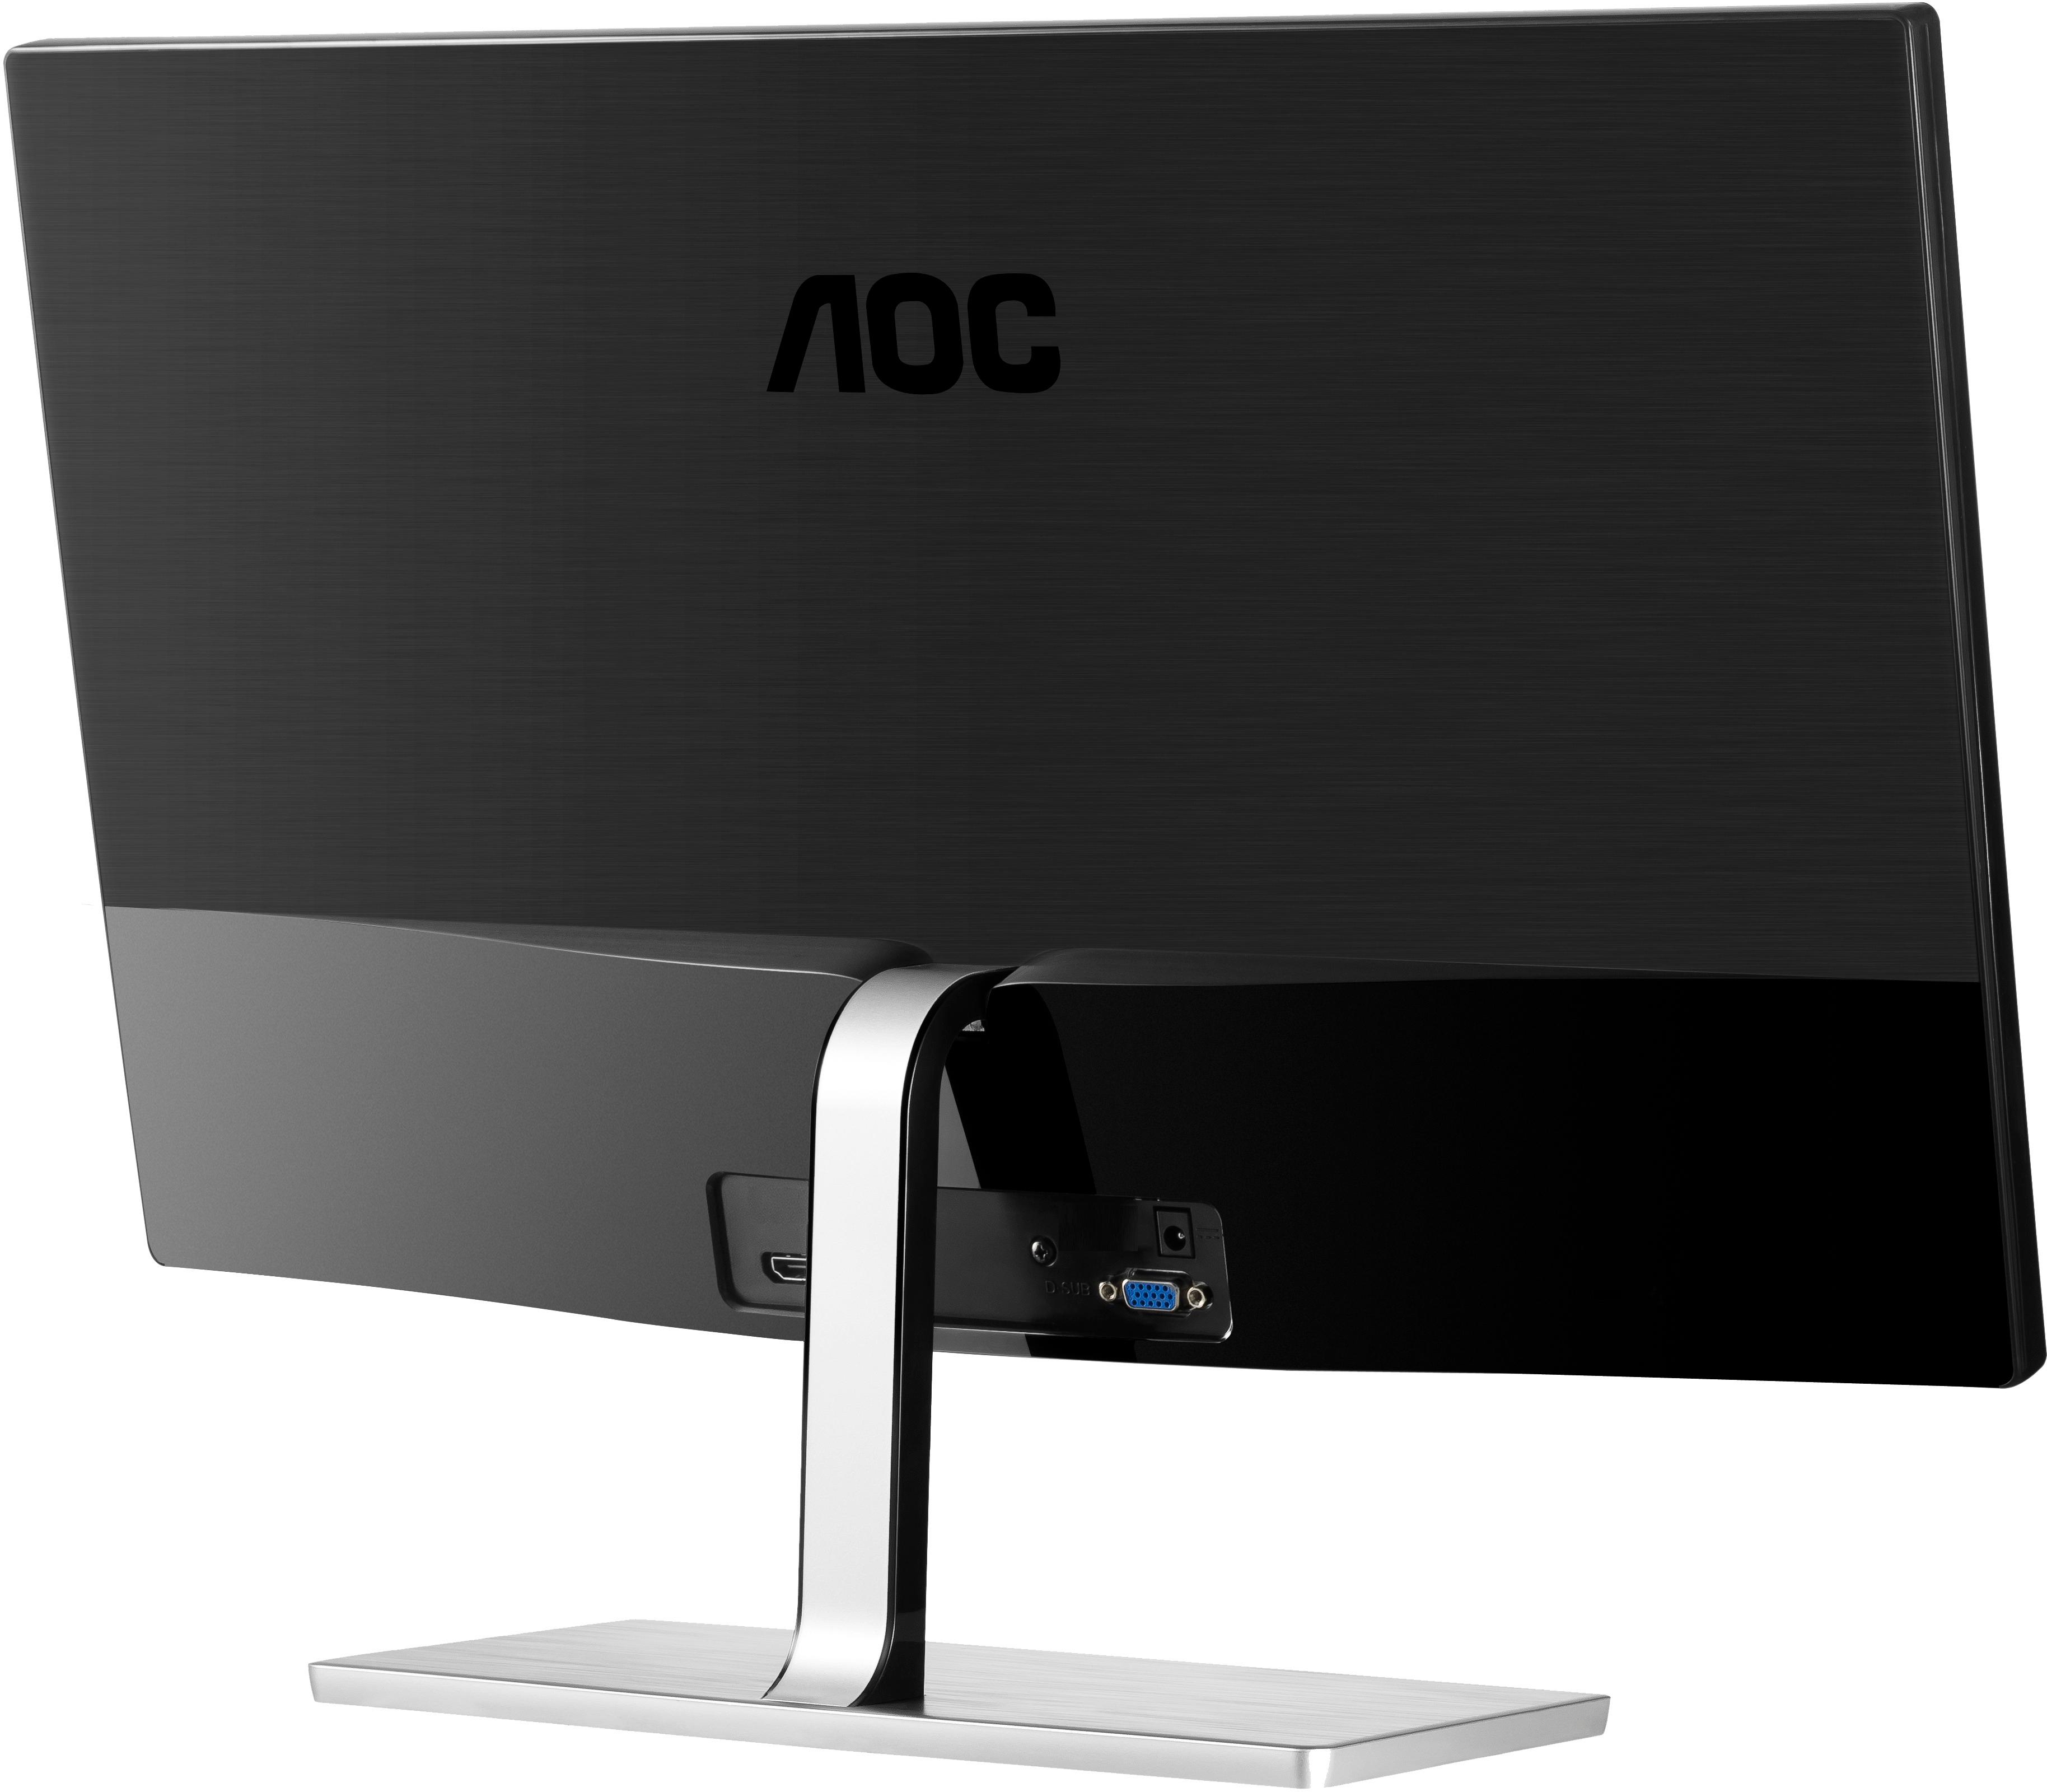 AOC - MONITOR LCD - 21.5 PULGADAS - 1920 X 1080 FULL HD - 250 CD